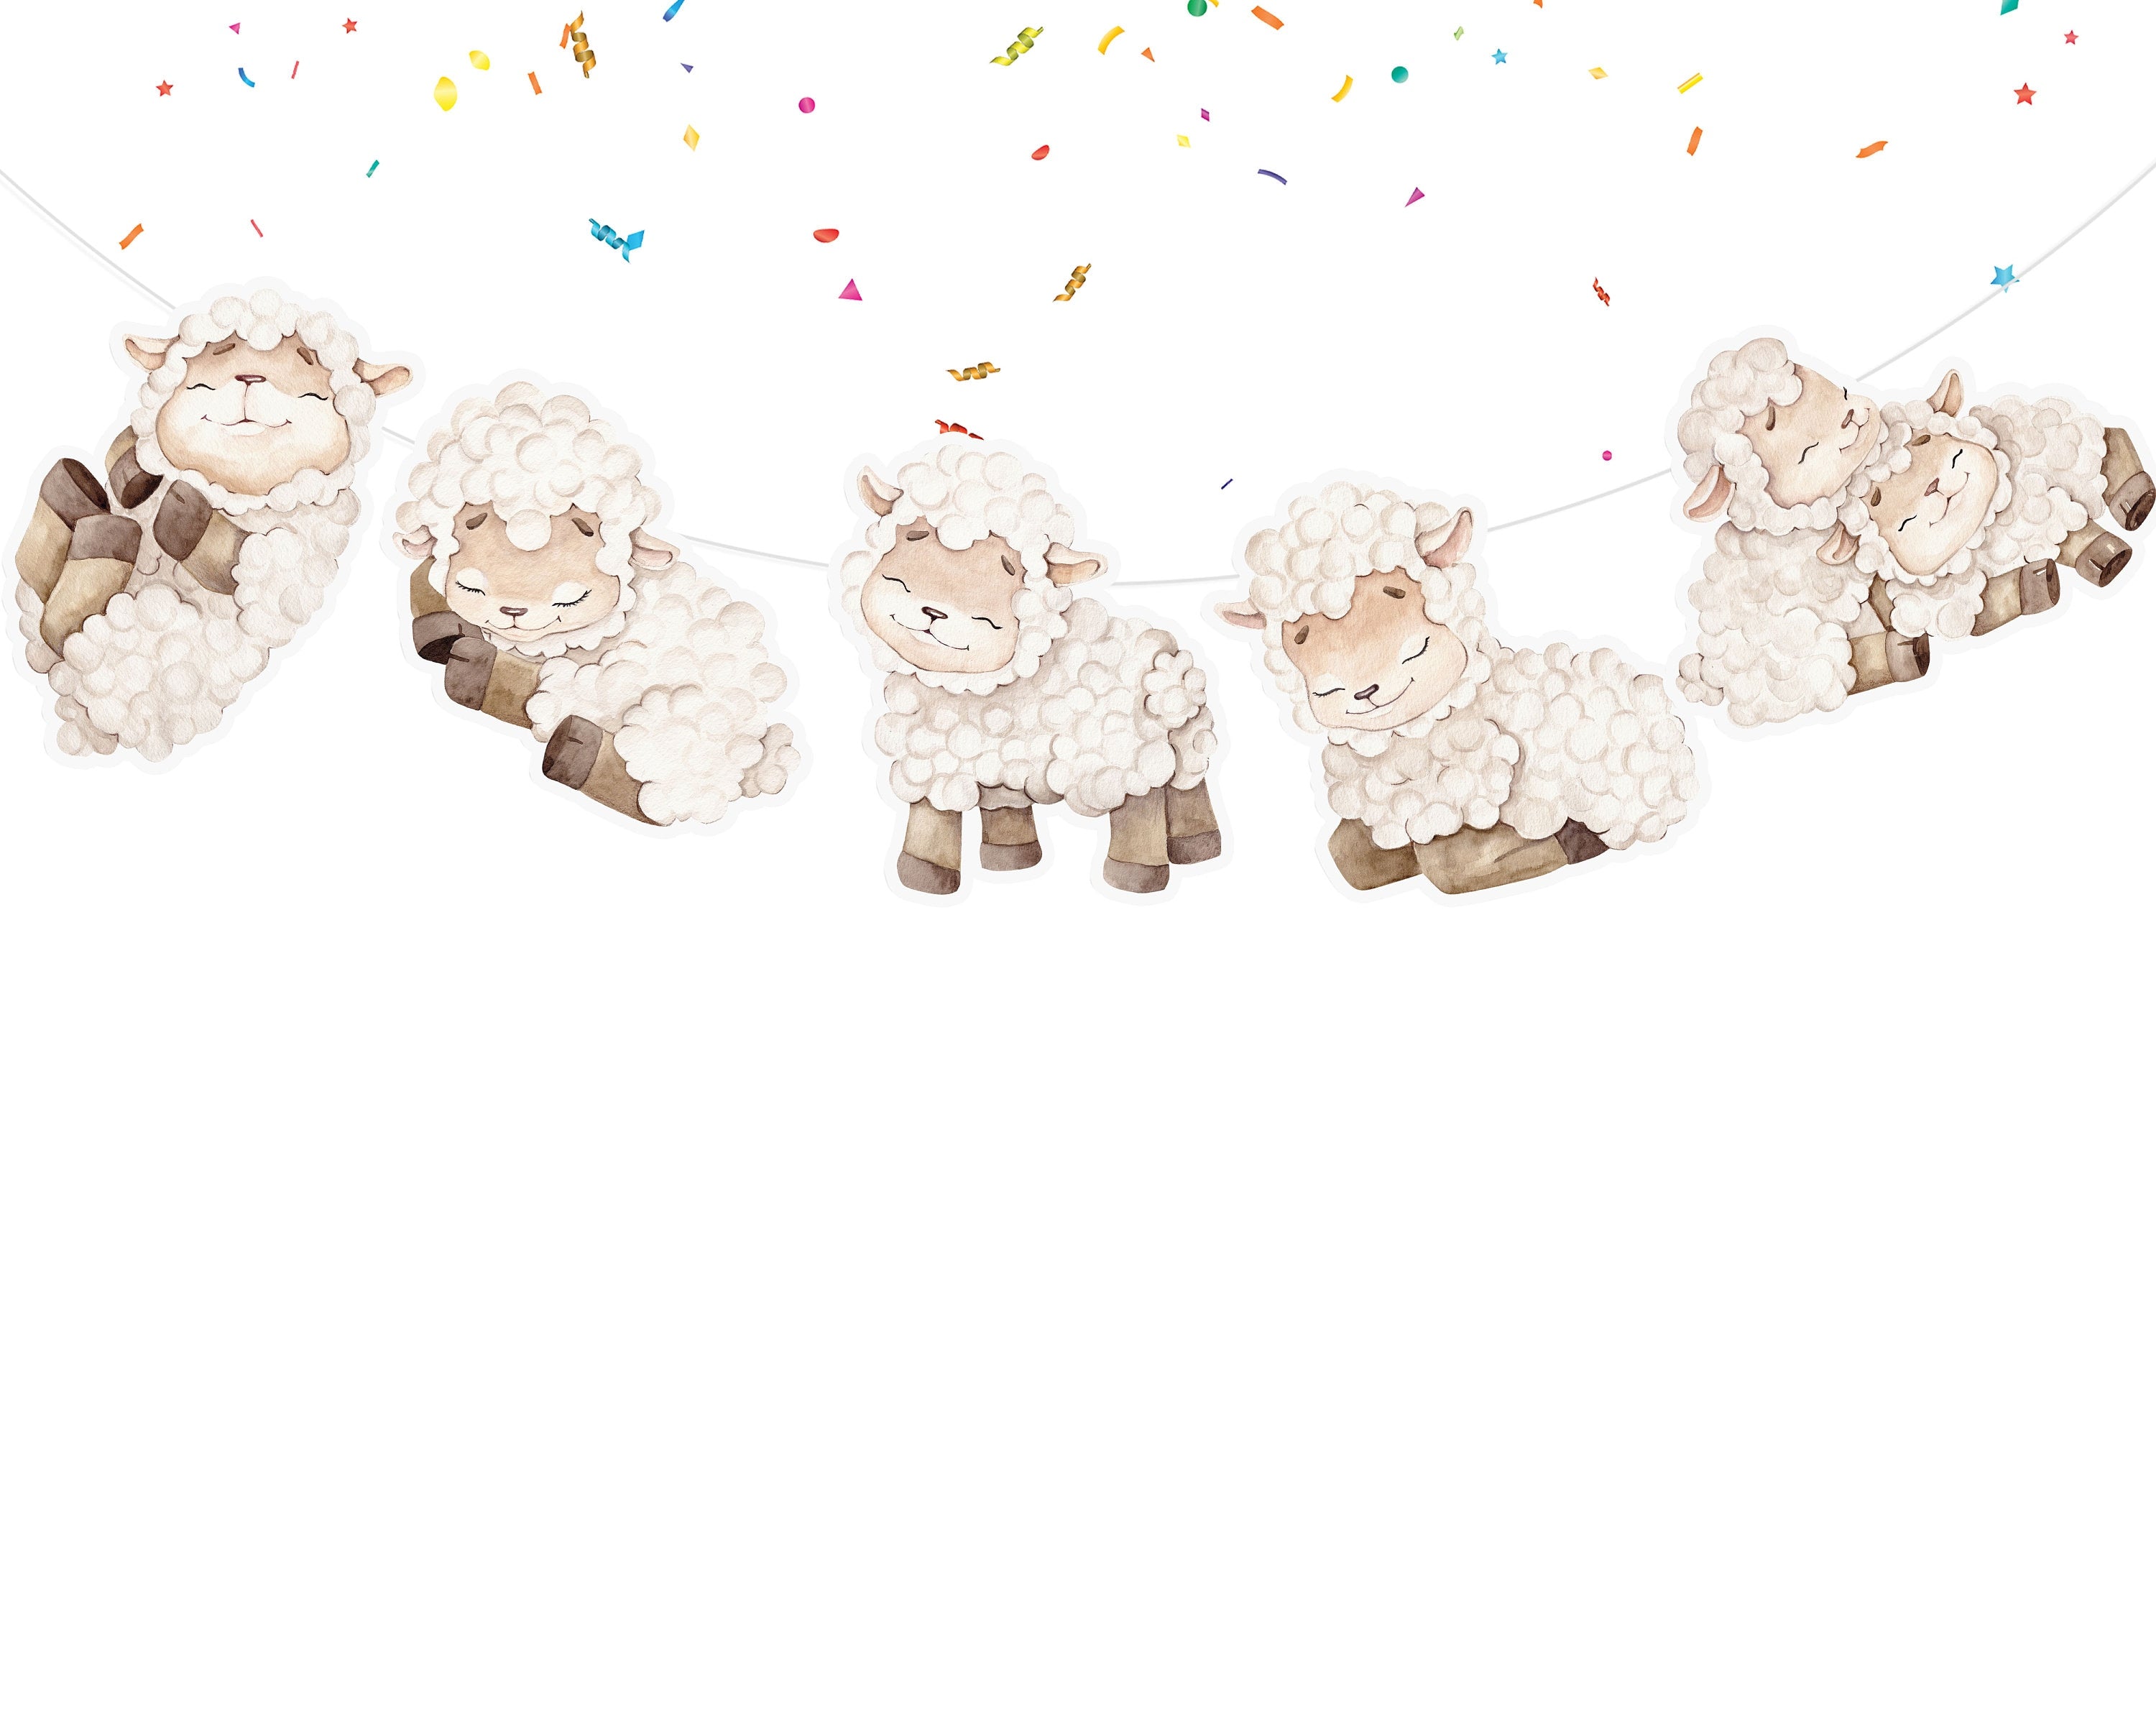 Sleepy Lambs Nursery Banner - Adorable Sheep Cartoon Decor for Children